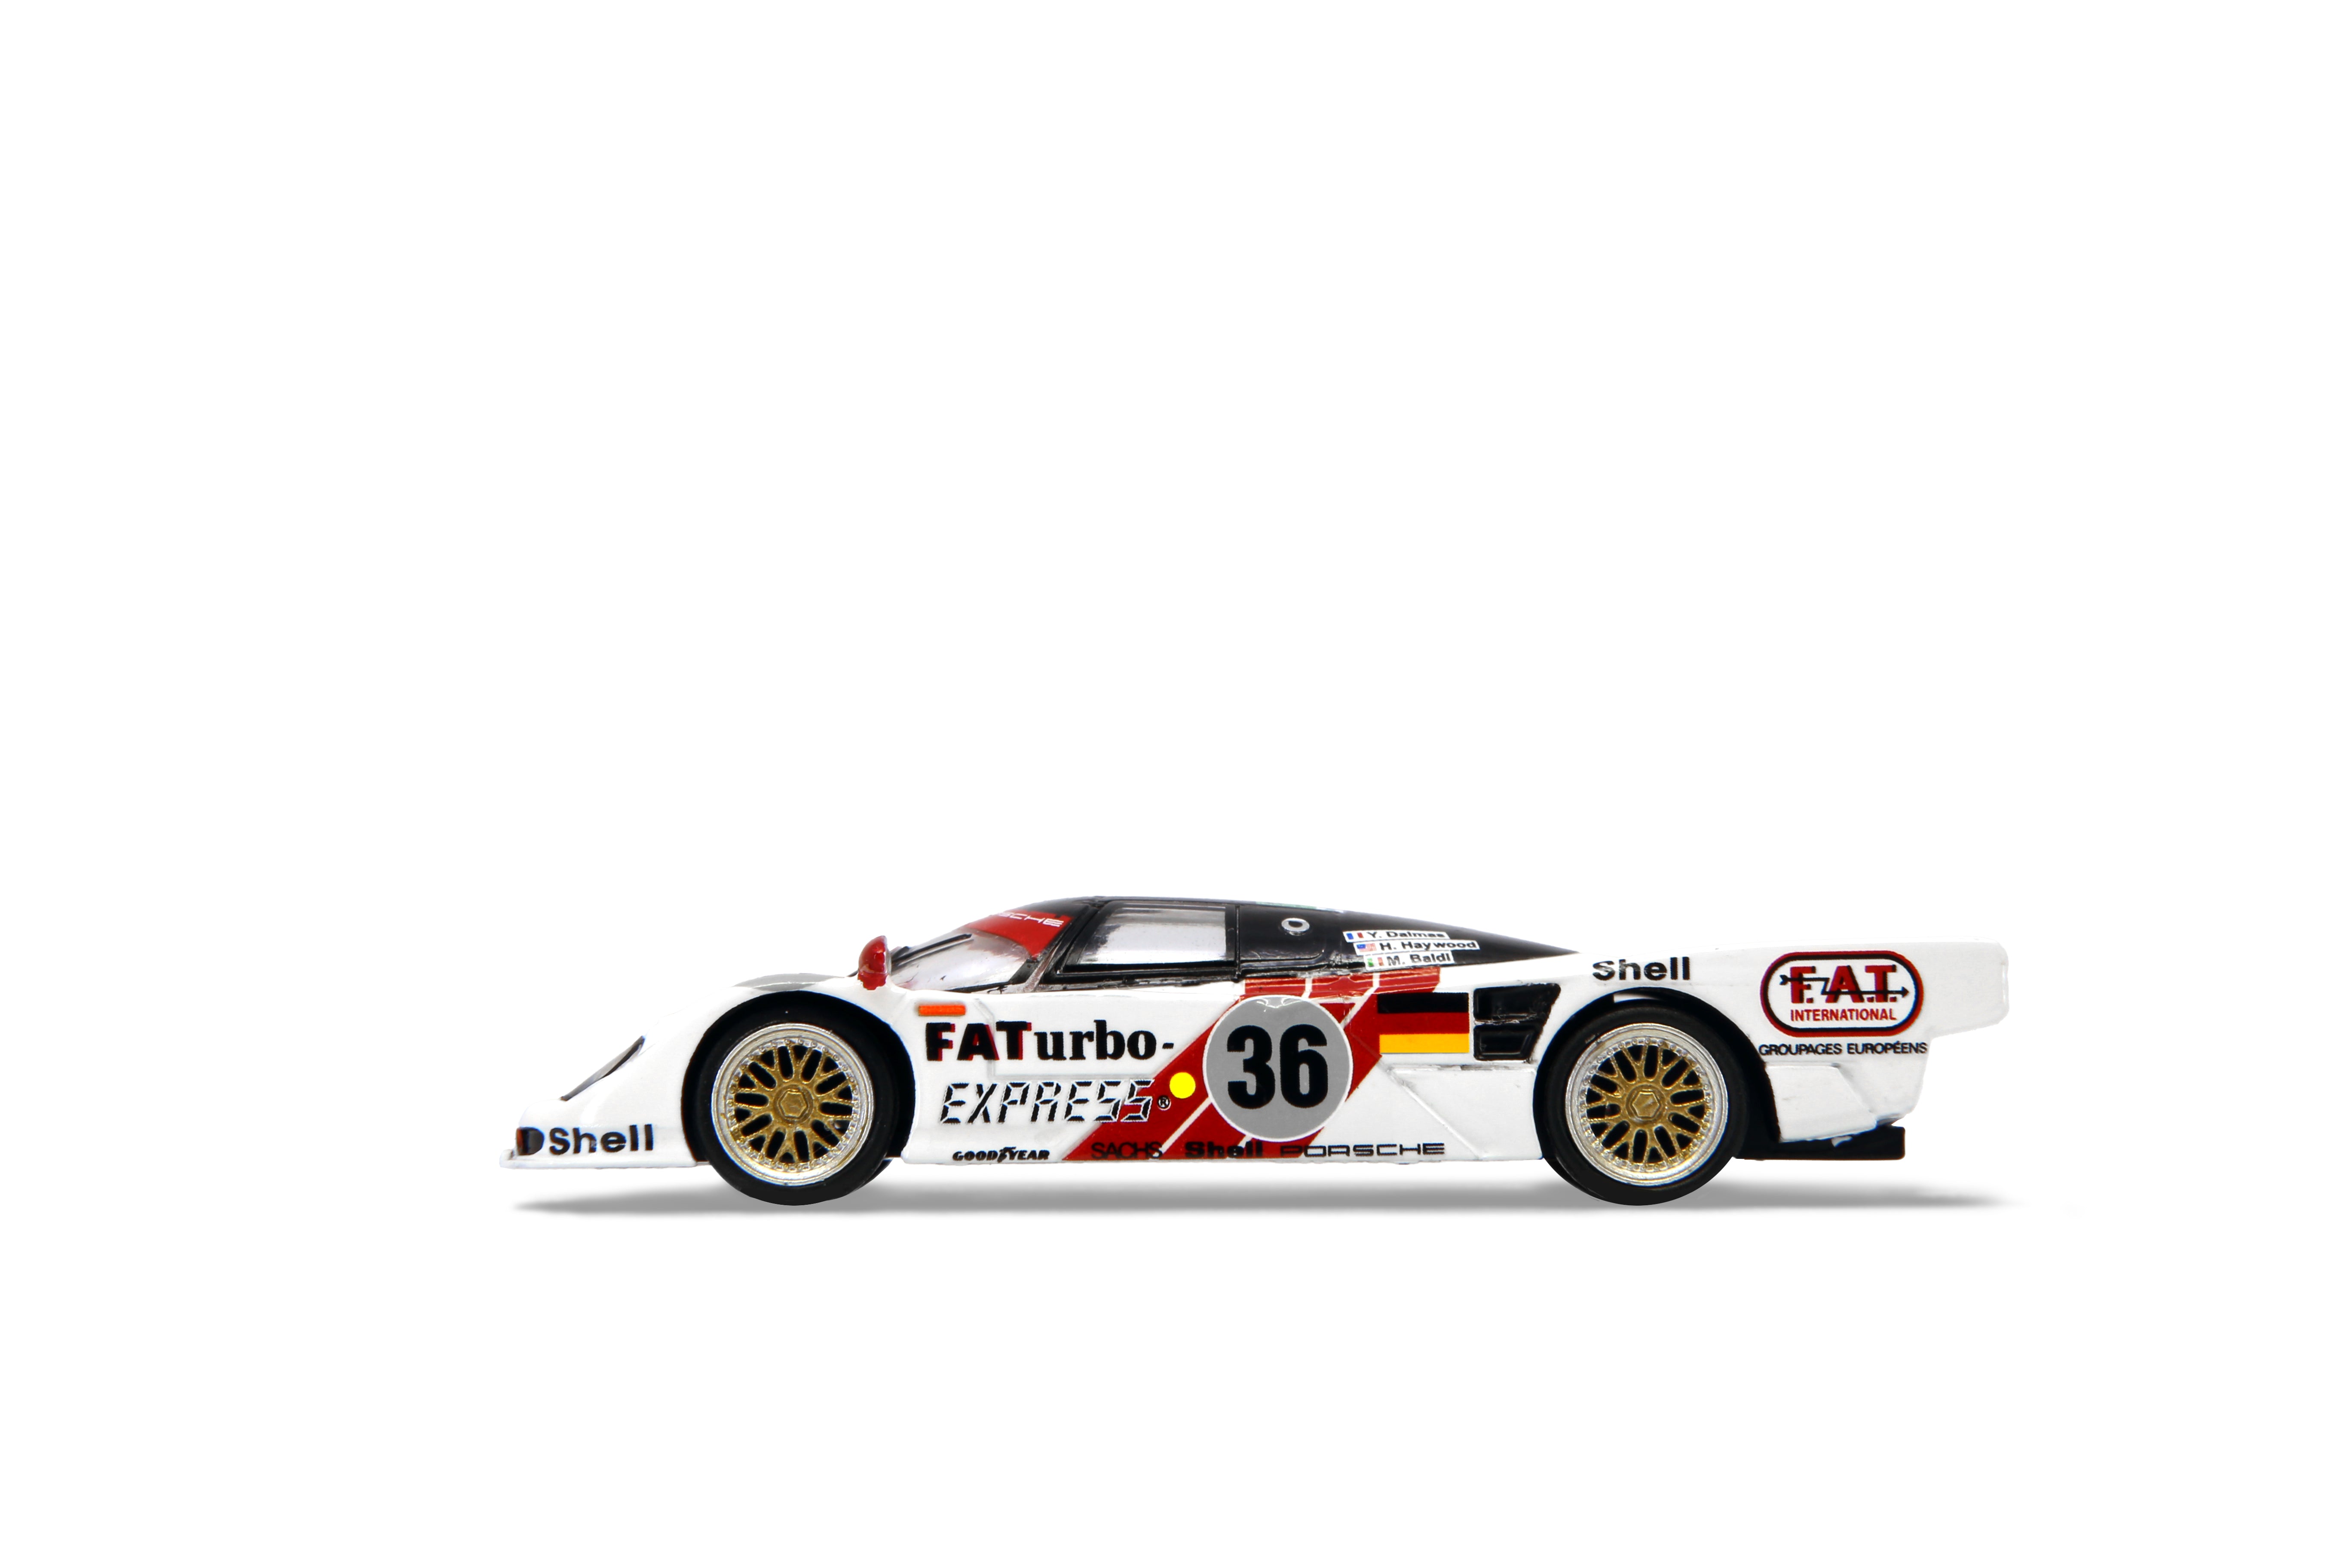 Tiny City x Sparky Diecast - Porsche 962 LM Shell Combo Winner 24h Le Mans 1994 #36 & #35